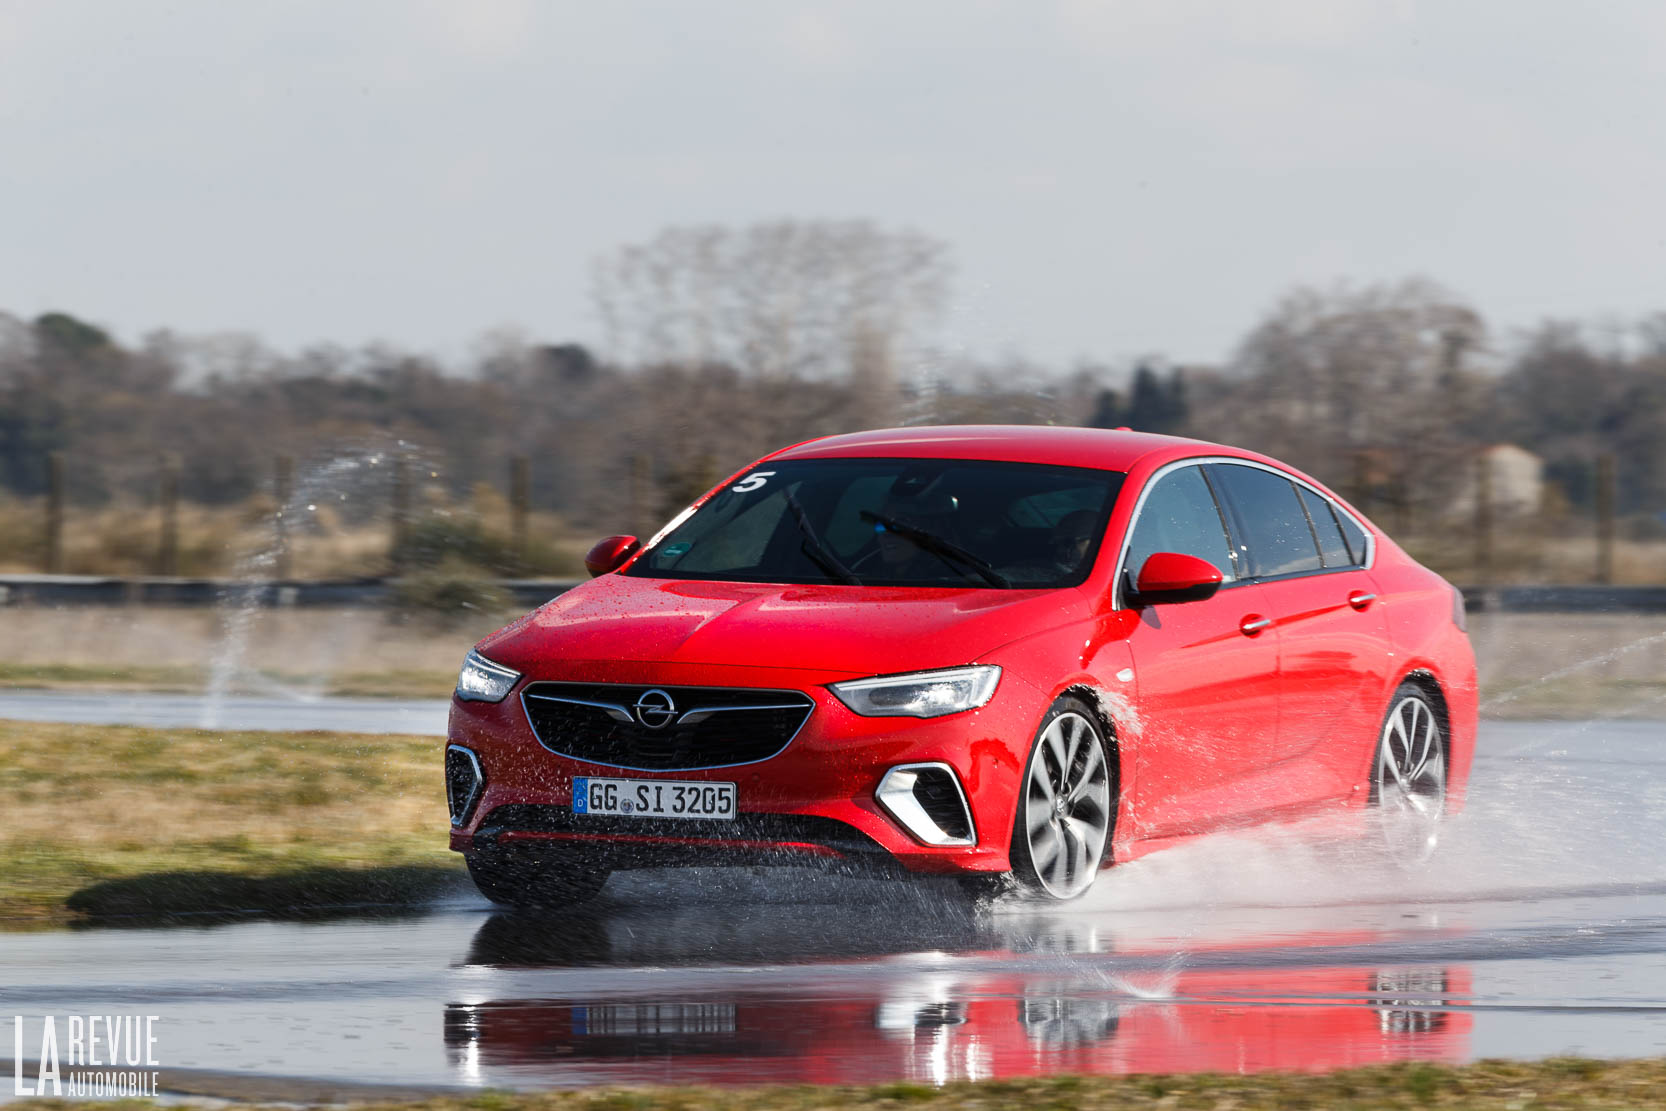 Image principale de l'actu: Essai en piste avec l'Opel Insignia GSi 260